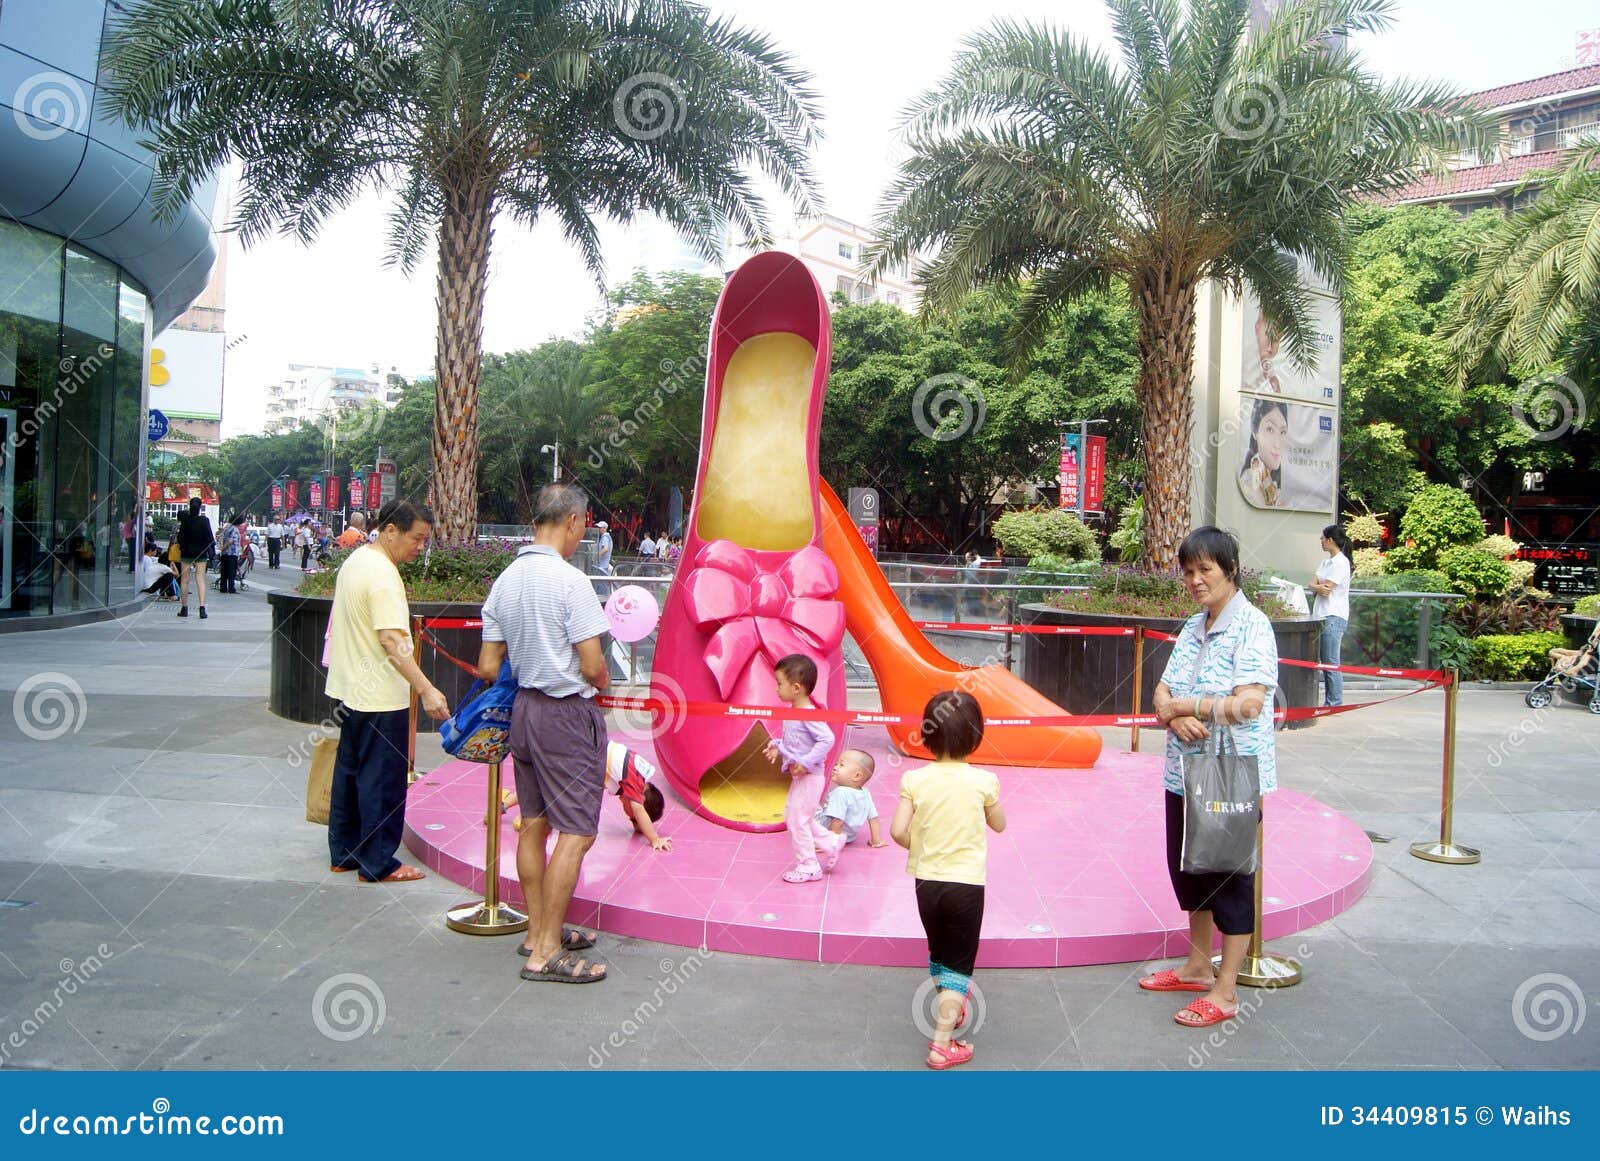 Shenzhen China: the Giant Lady Shoes Sculpture Landscape Editorial Image -  Image of arts, haiya: 34409815